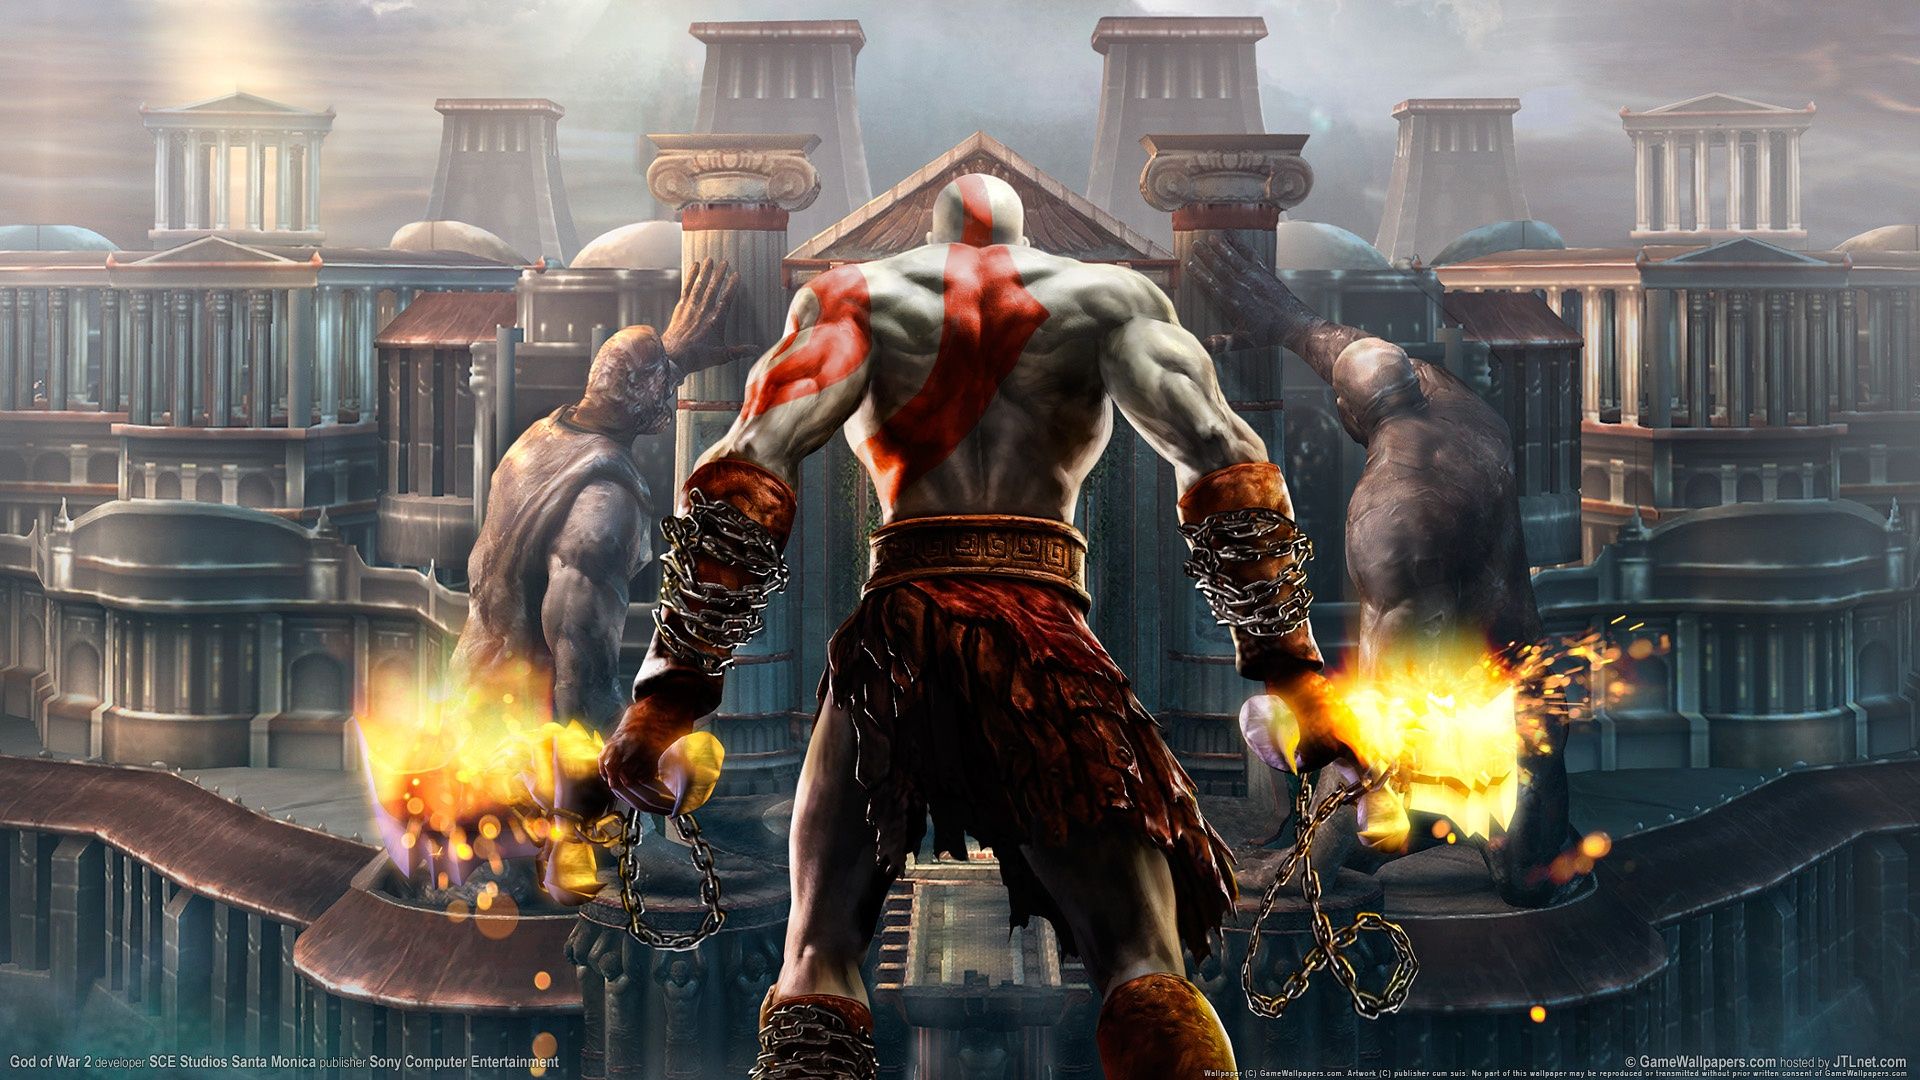 God of War 2 HD Wallpaper in jpg format for free download